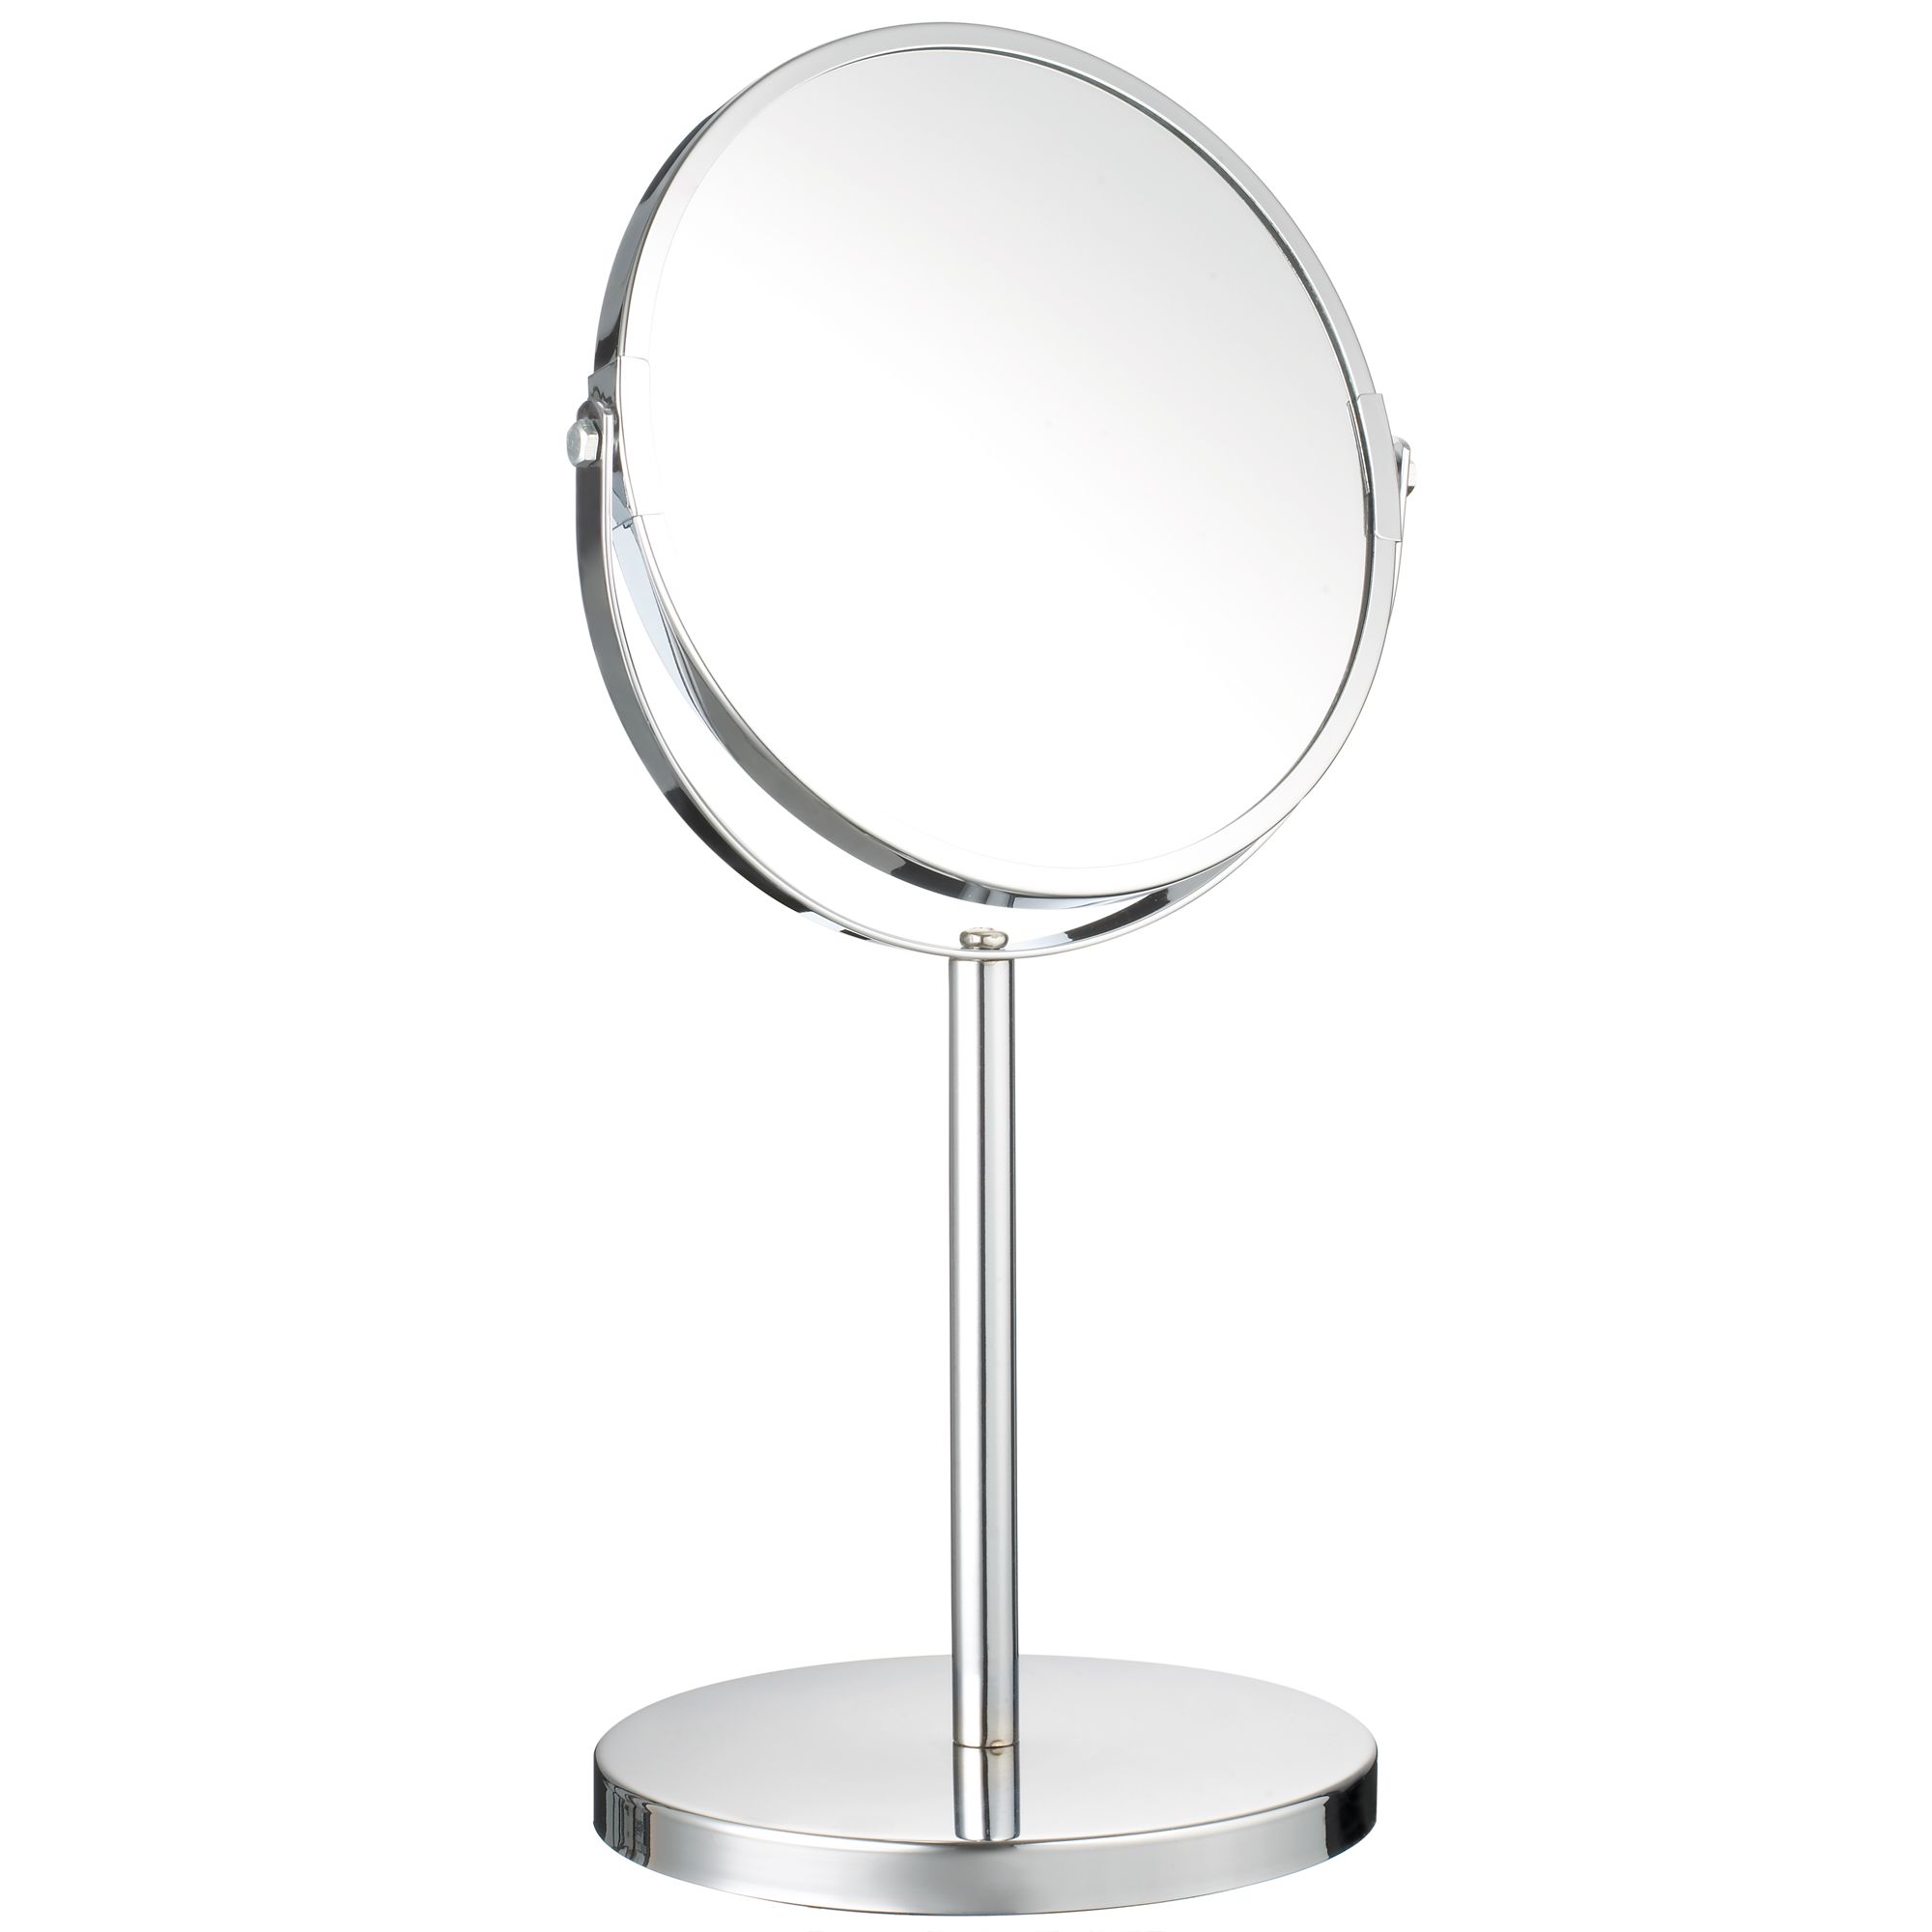 Heavy Based Pedestal Mirror